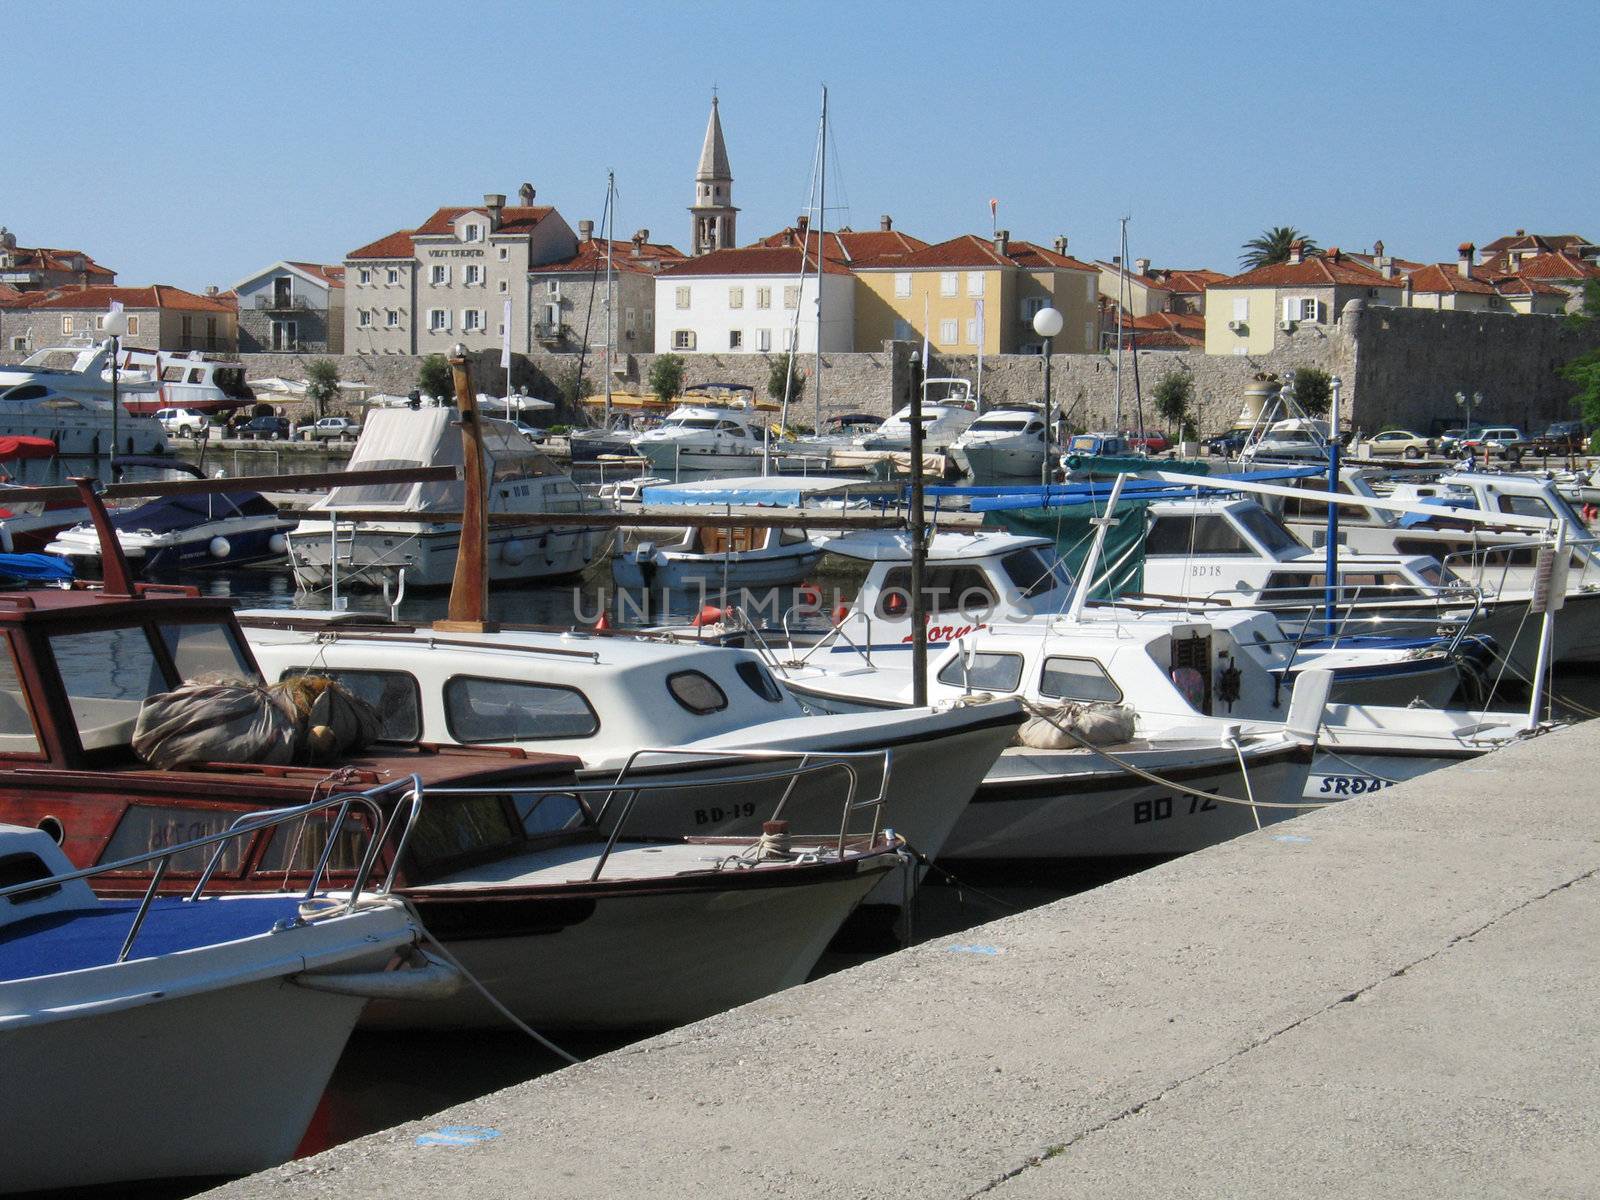 Budva marina with old town view, Montenegro